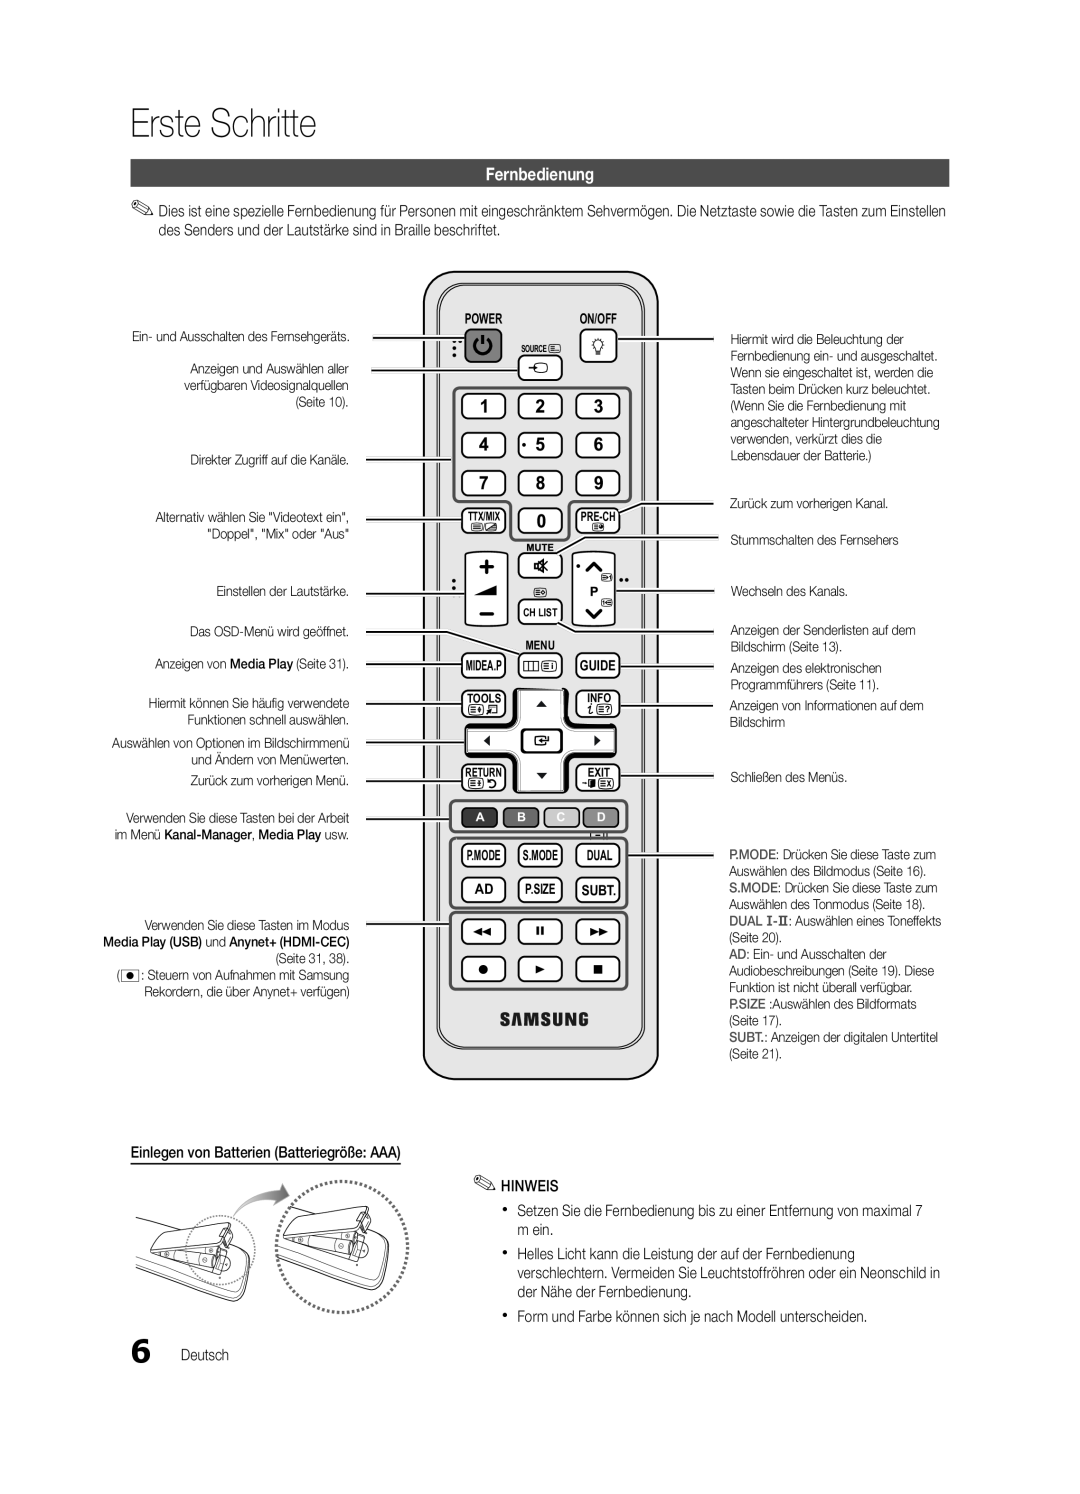 Samsung UE46C5700QSXZG manual Fernbedienung, Erste Schritte, Power On/Off, P.Mode S.Mode Dual Ad P.Size Subt, Midea.P Guide 